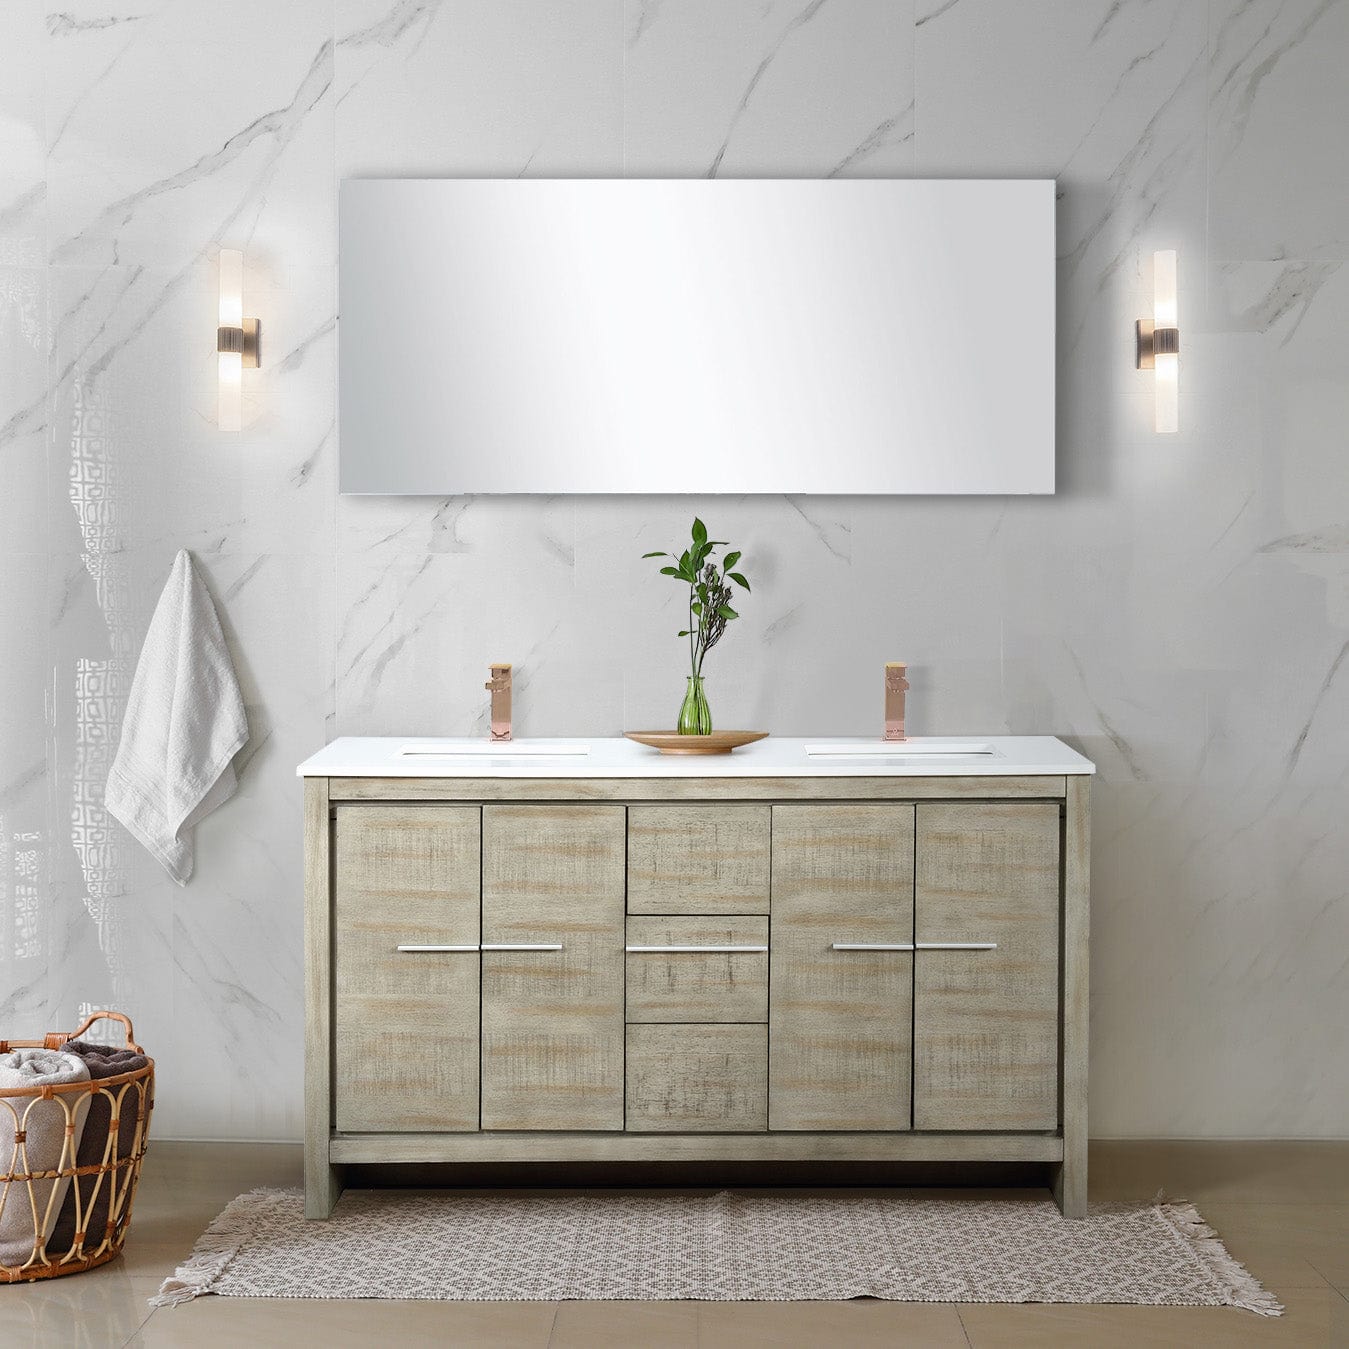 Lexora Bathroom Vanity Cultured Marble / Rose Gold Faucet / No Mirror Lafarre 60" Rustic Acacia Double Bathroom Vanity